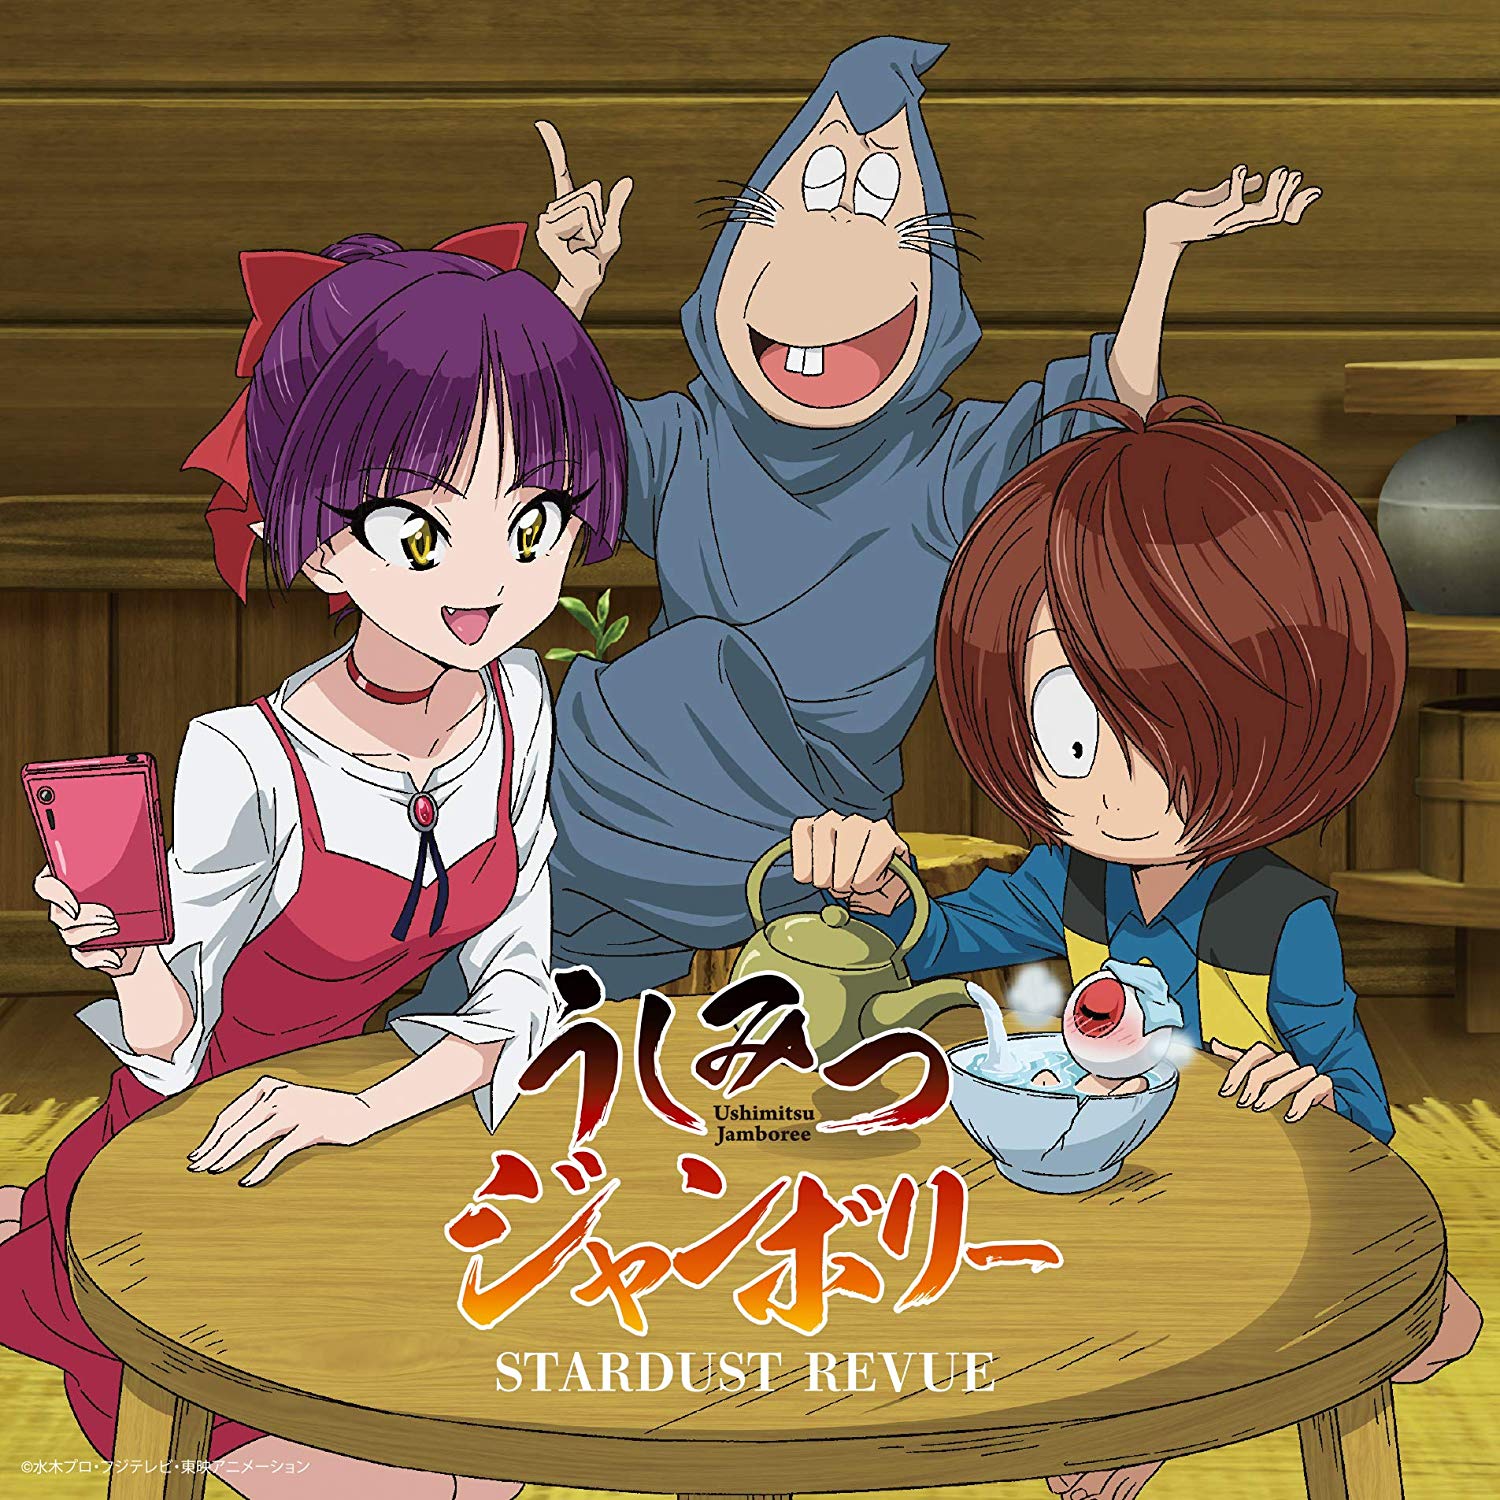 Stardust☆Revue - Ushimitsu Jamboree